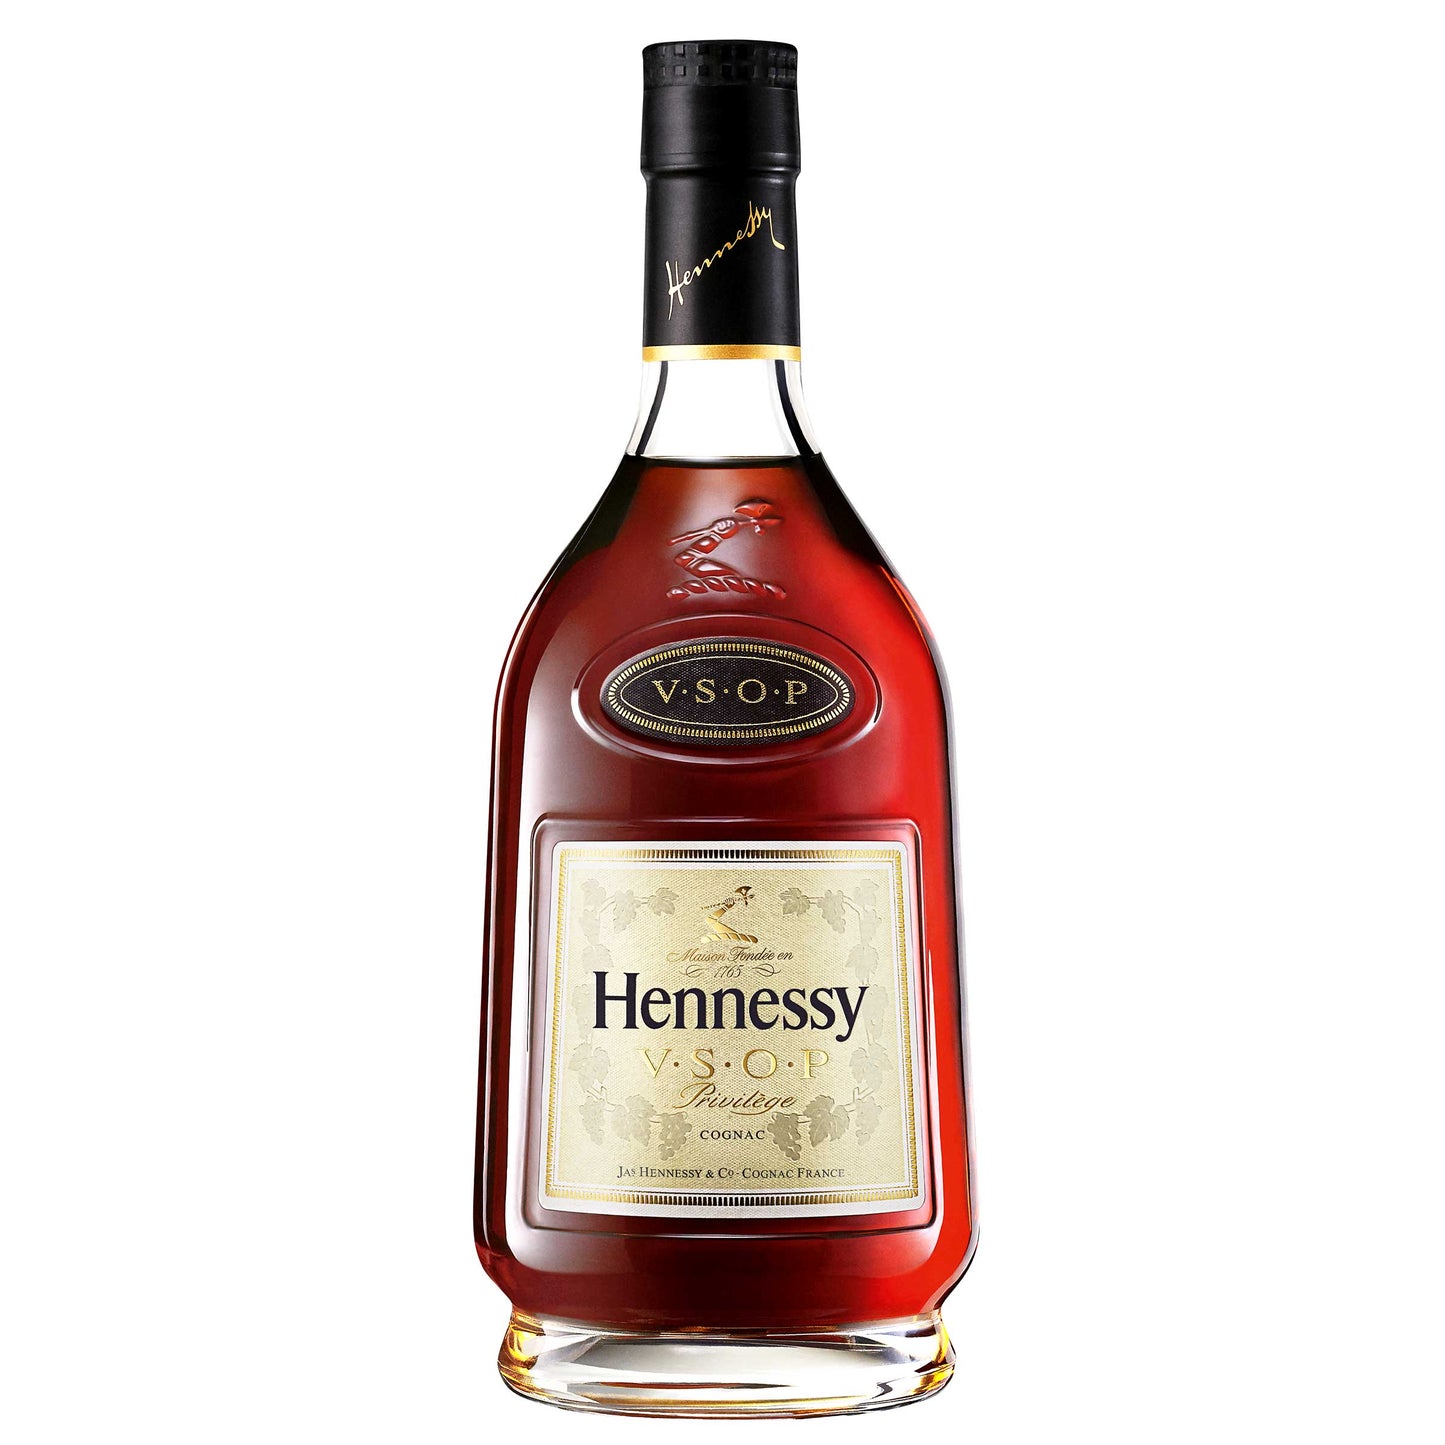 Hennessy Vsop Cognac Privilege